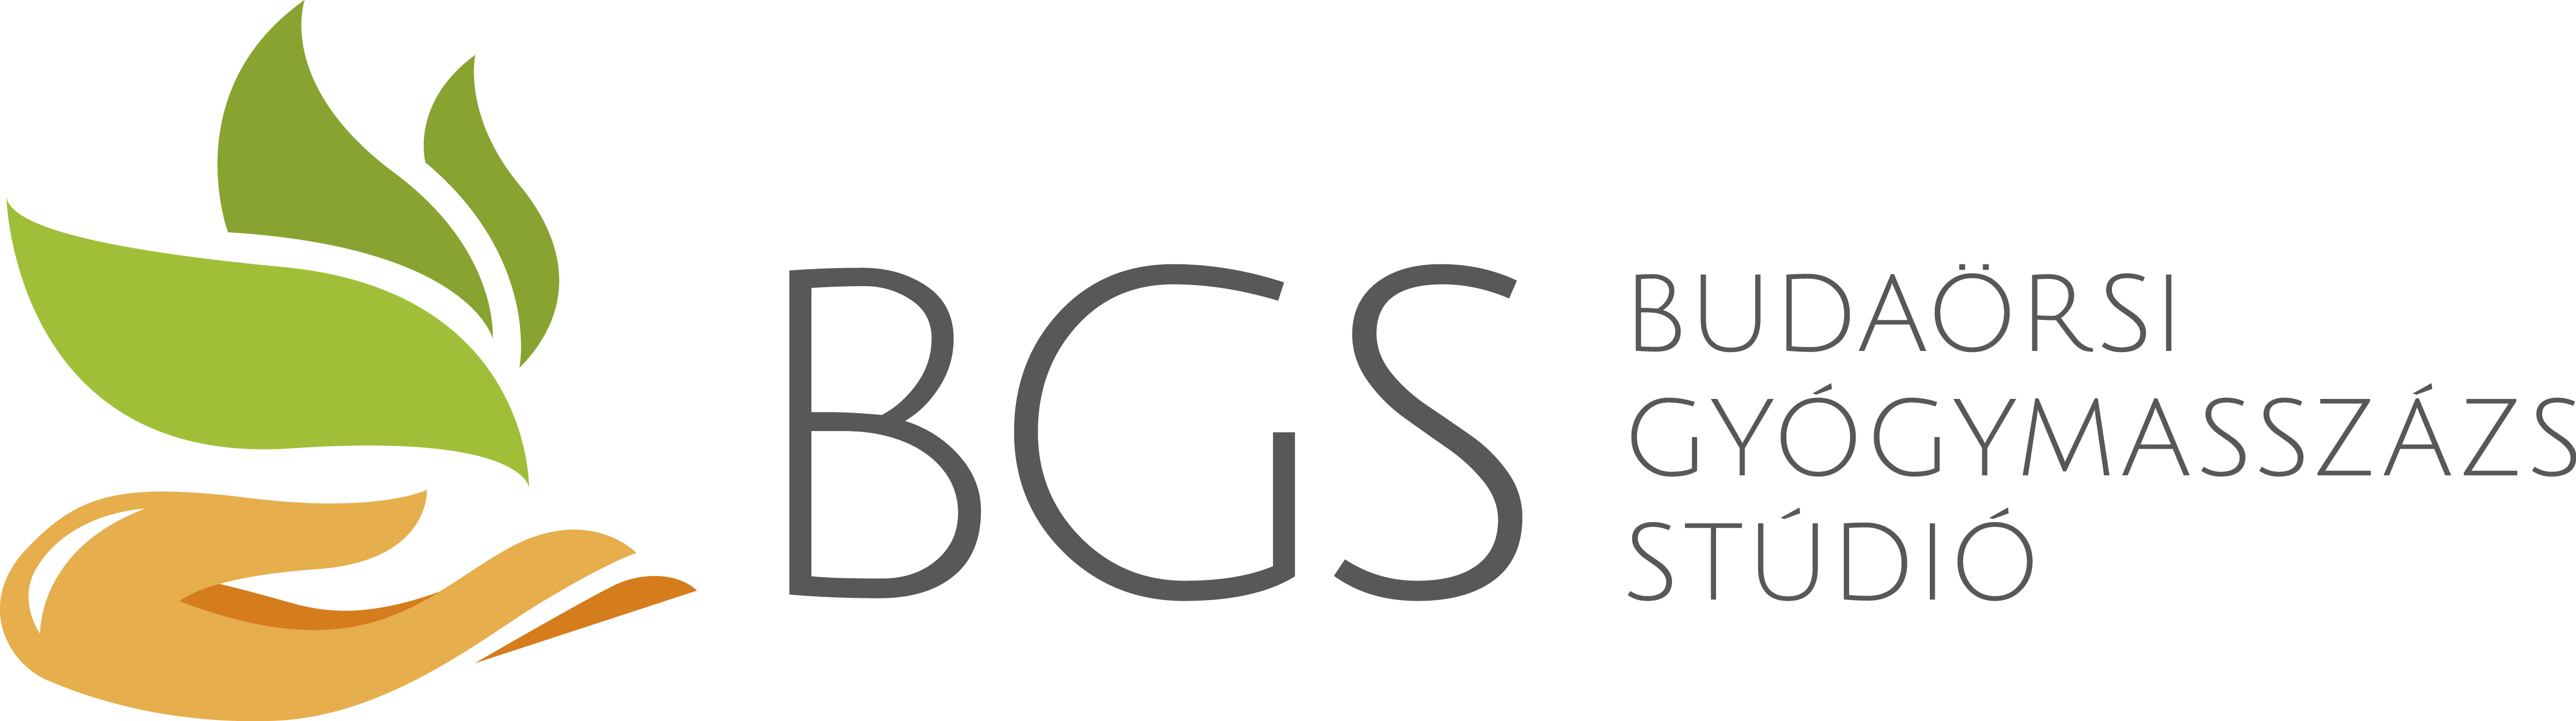 bgs_logo_rgb.jpg